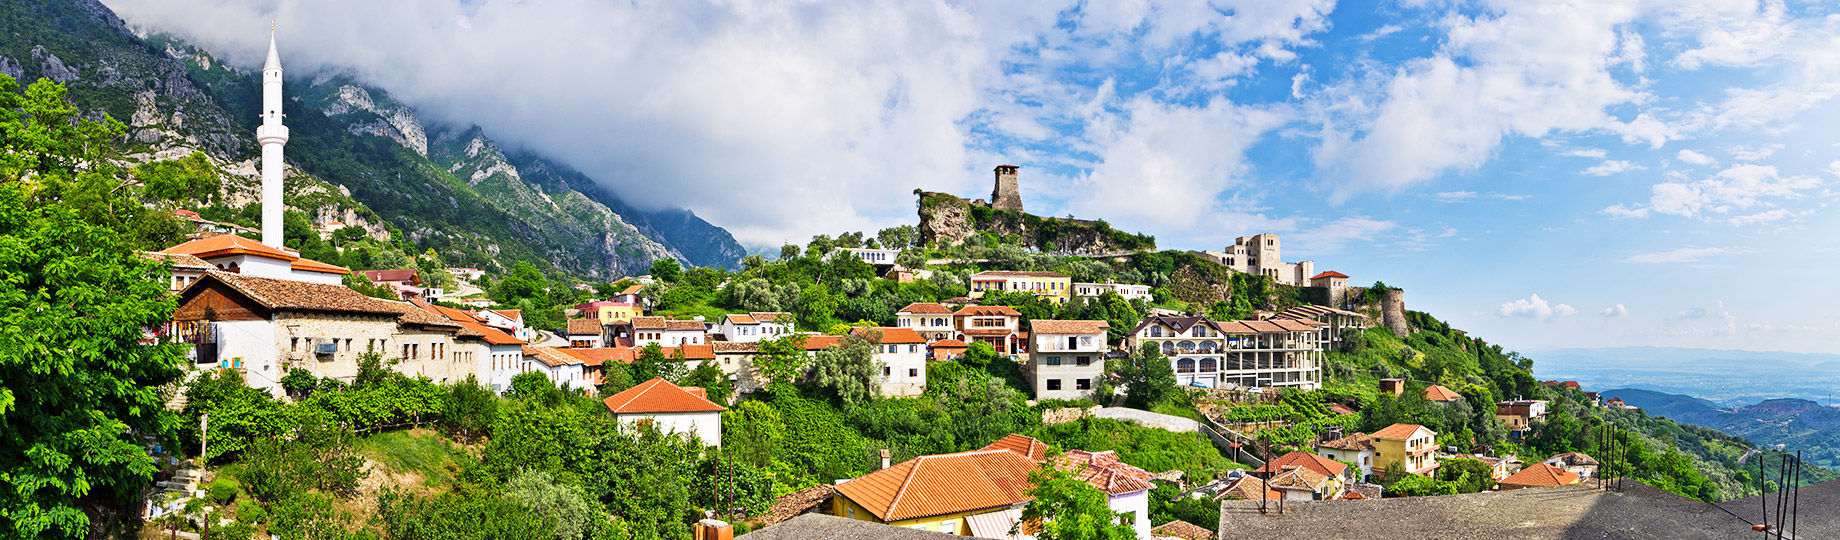 Mountainside Homes - Tirana, Albania